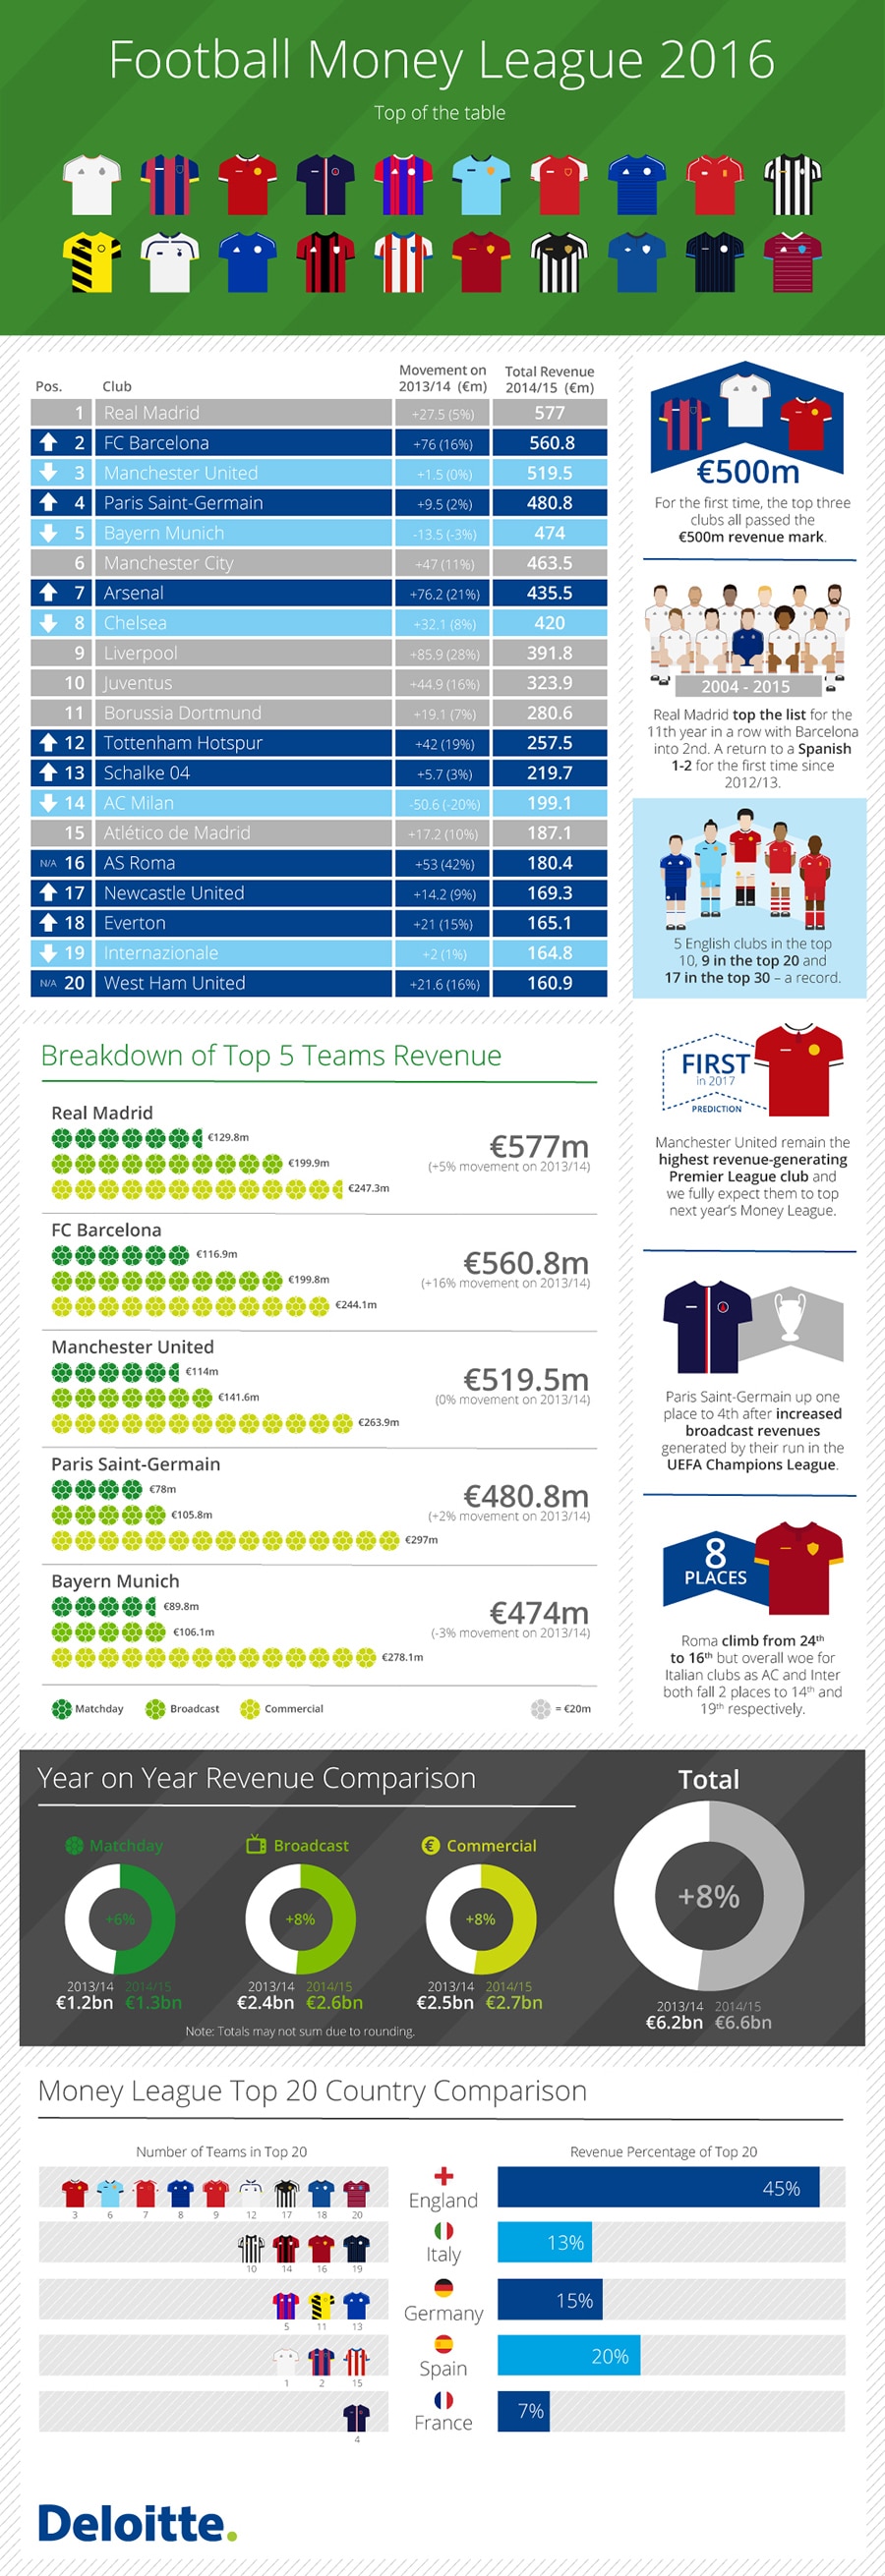 Deloitte Football Money League 2016 infographic